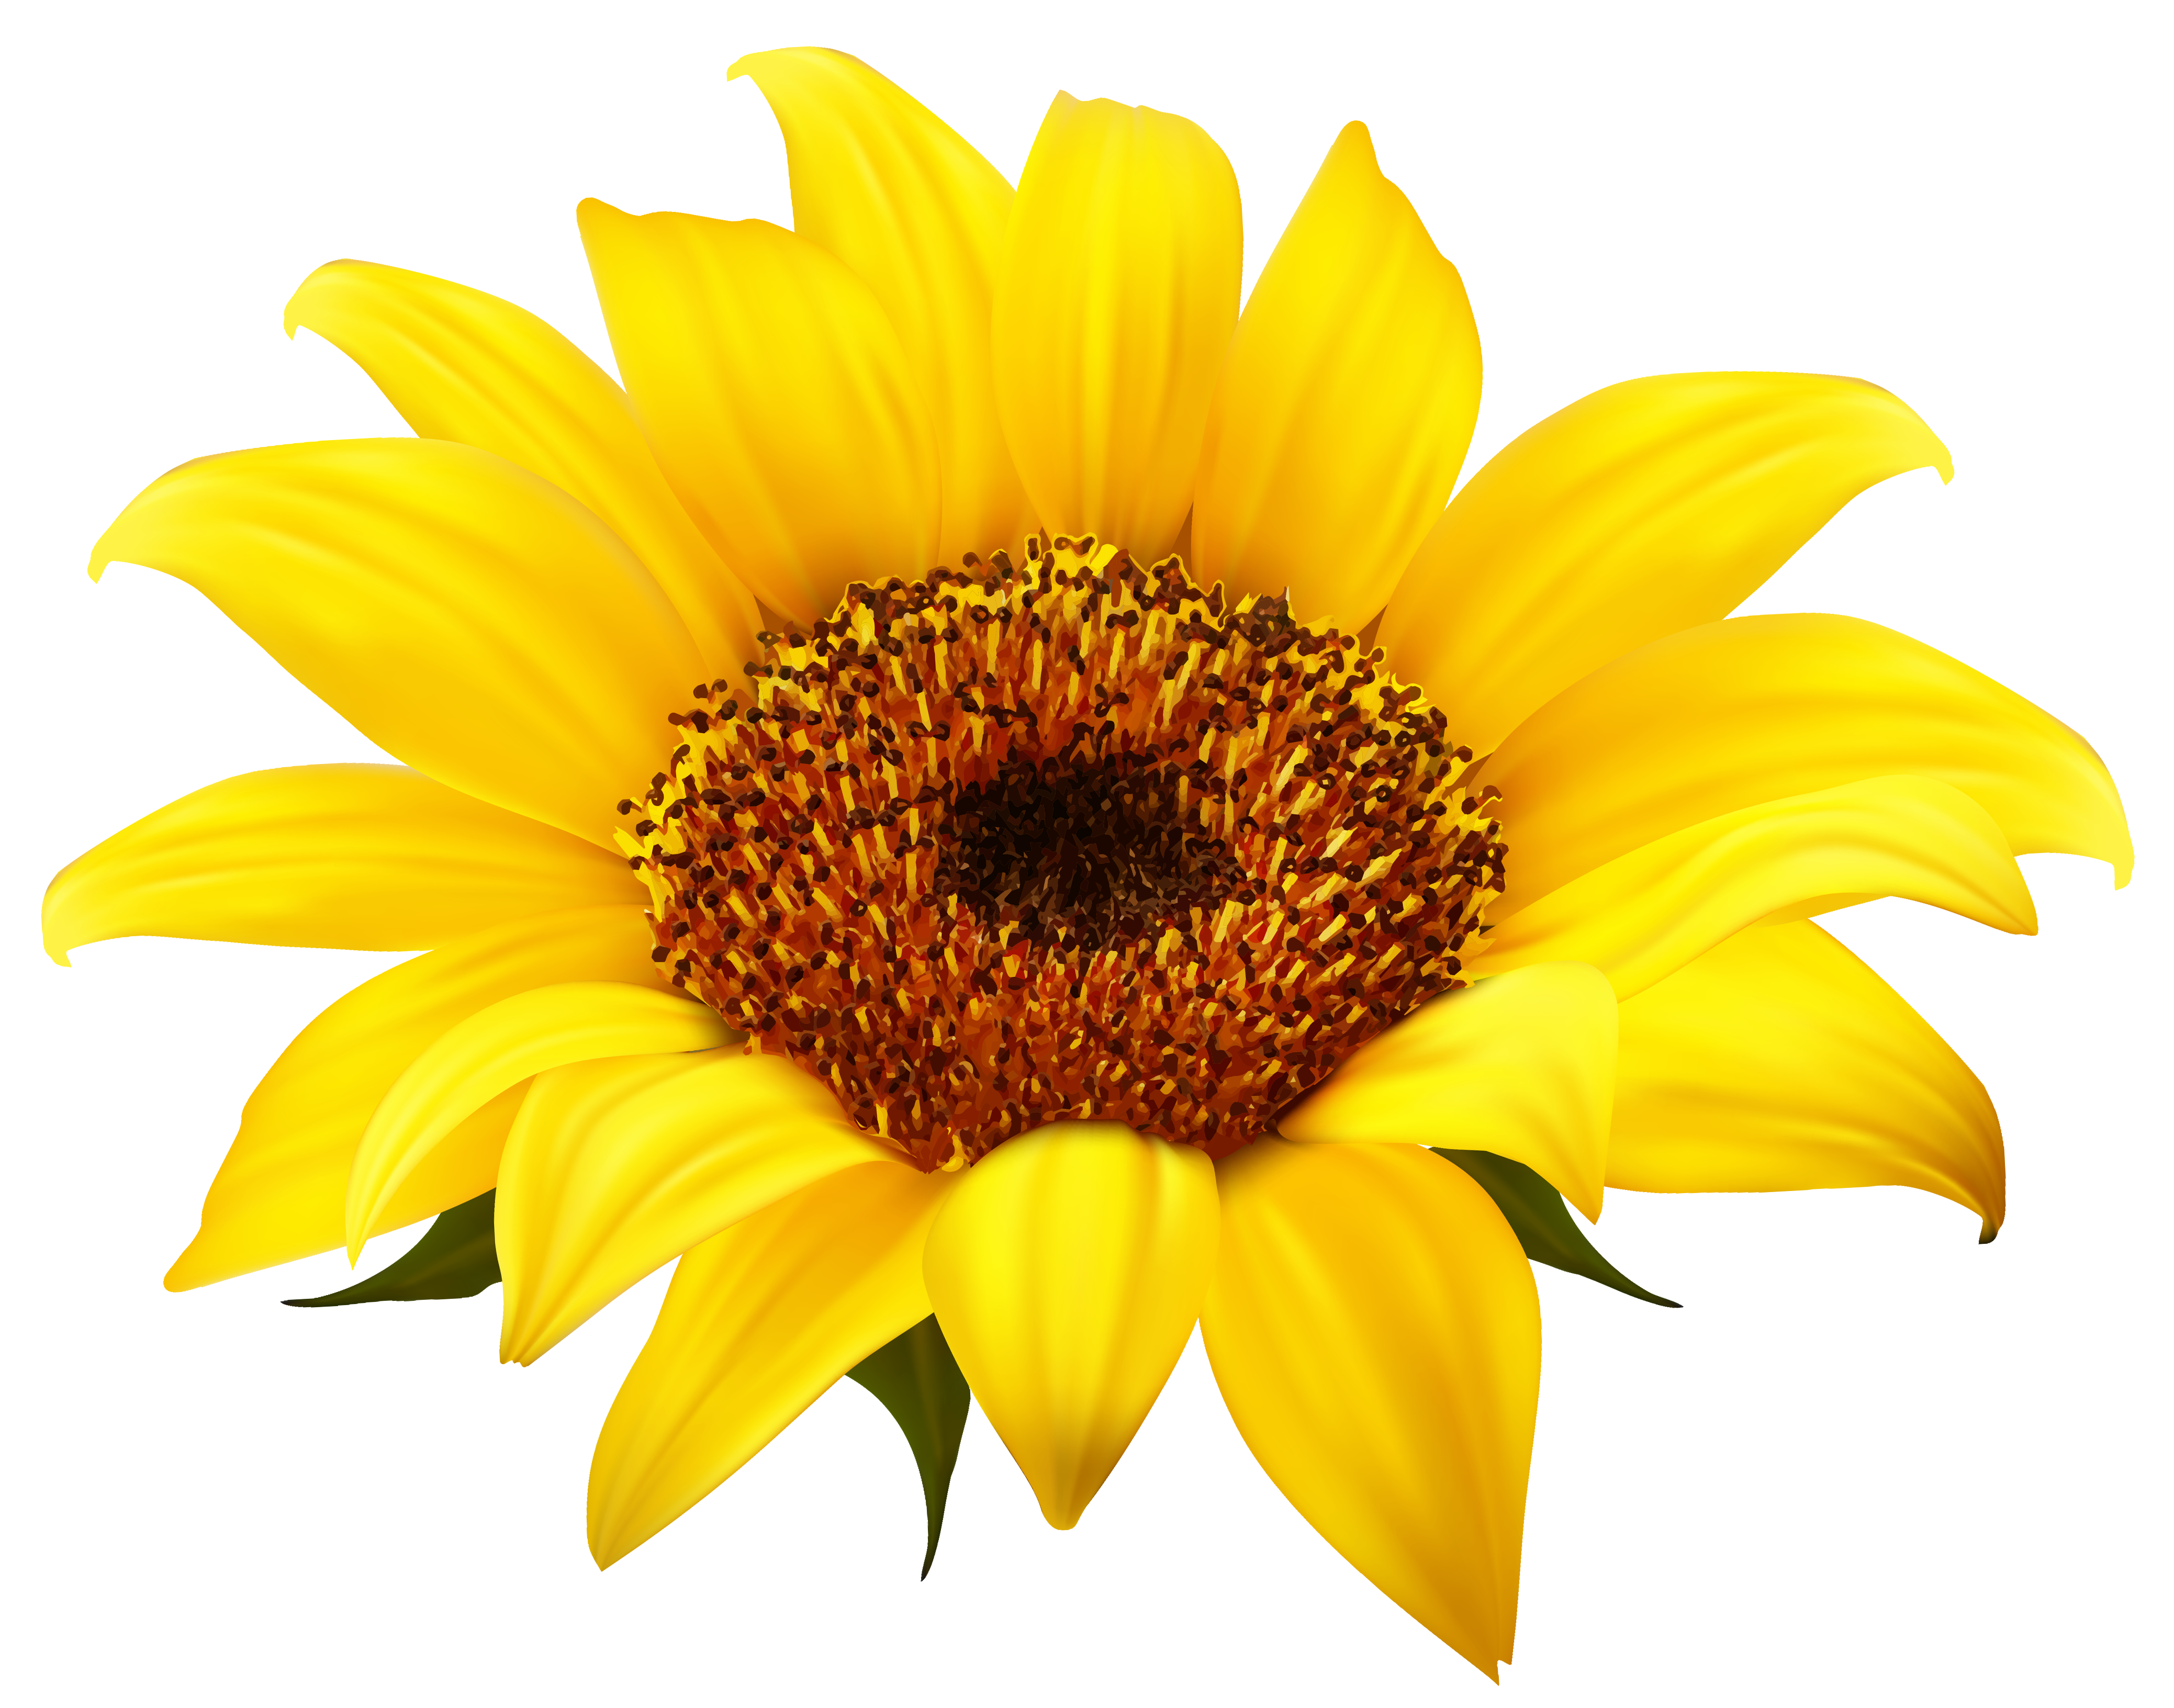 bunga matahari clipart 10 free Cliparts | Download images ...